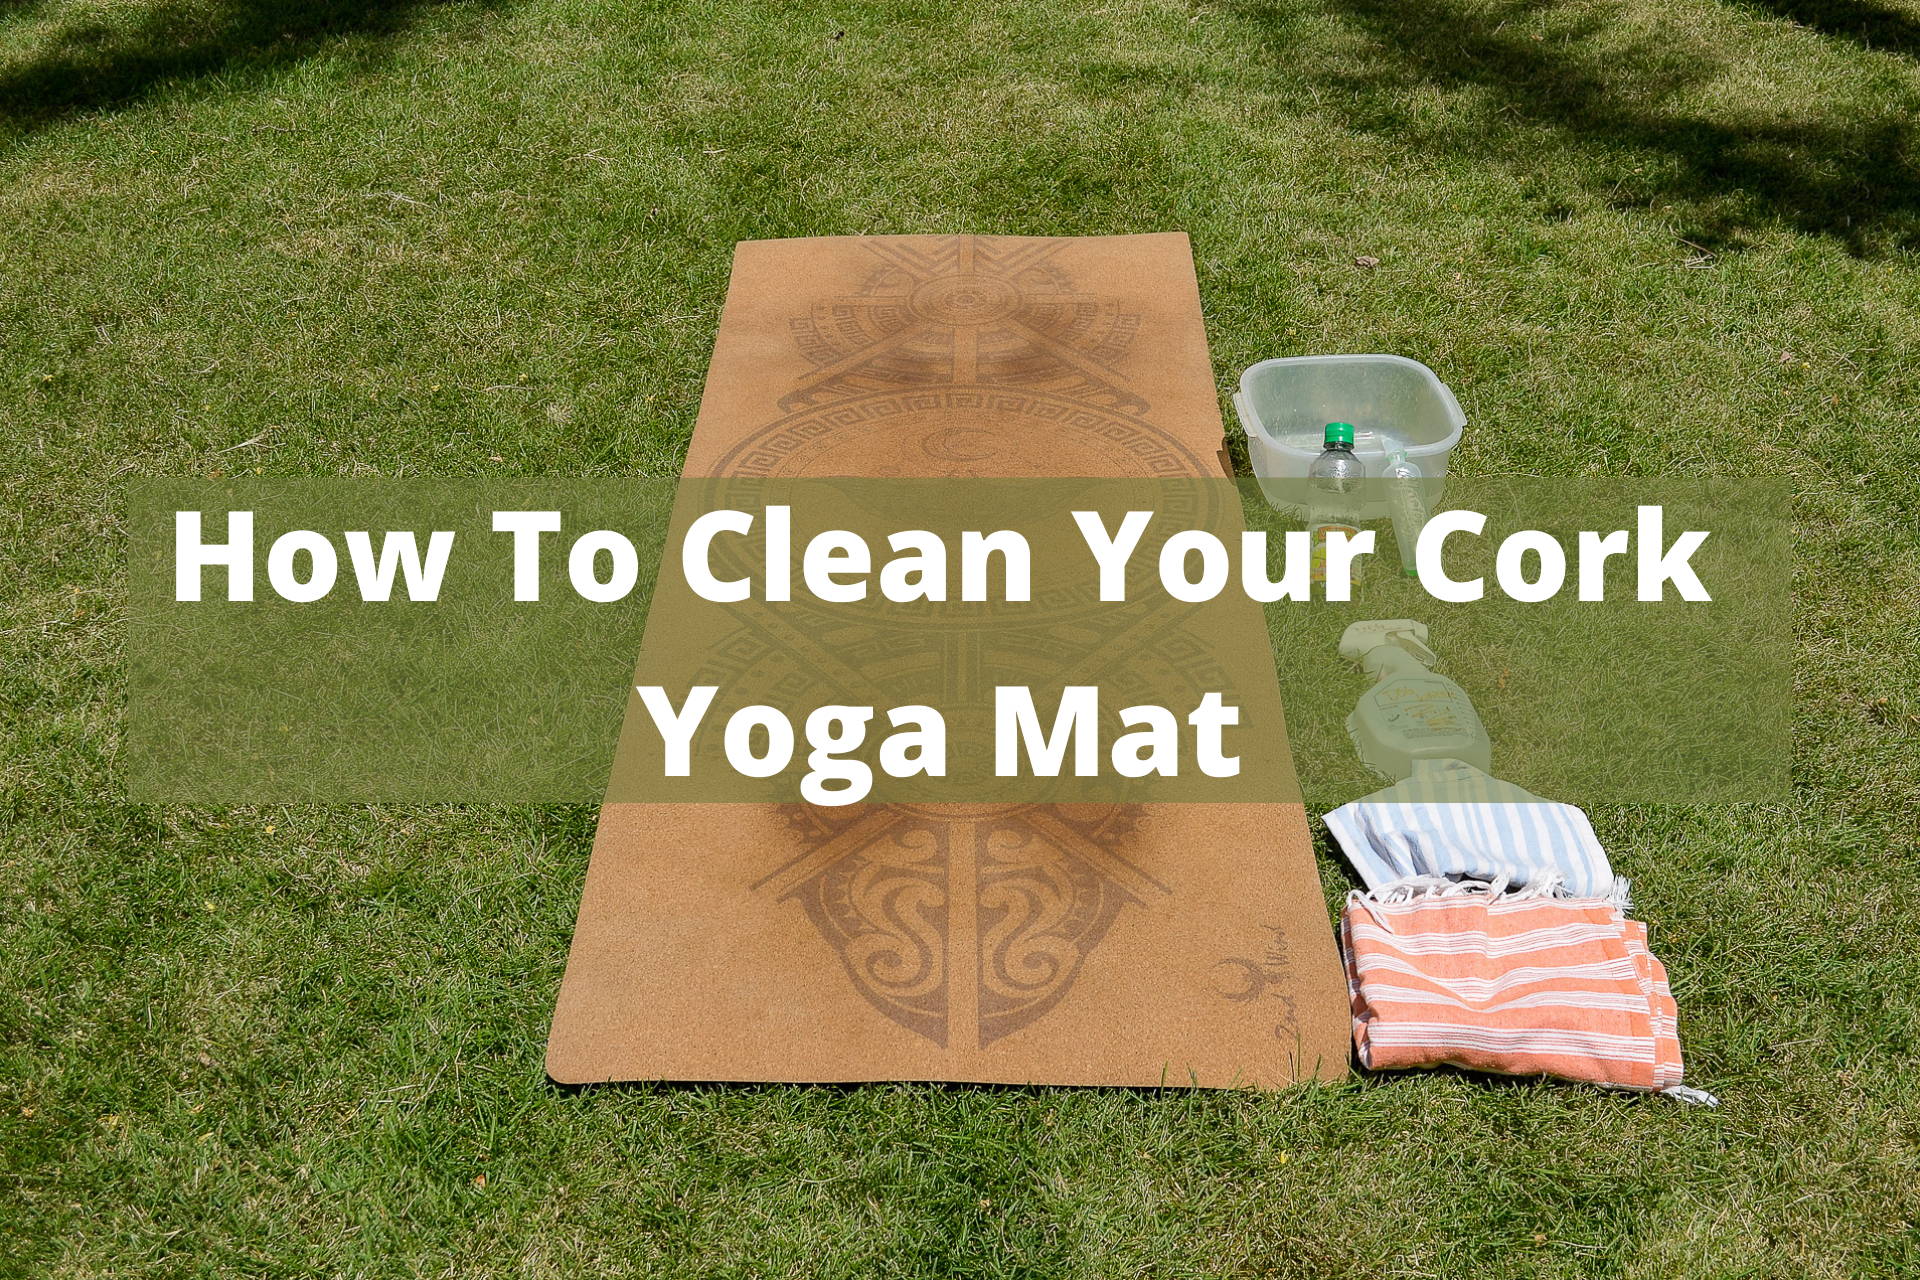 How to use the Alo yoga strap @ALO, LLC #alowarrioryogamat #aloyogastr